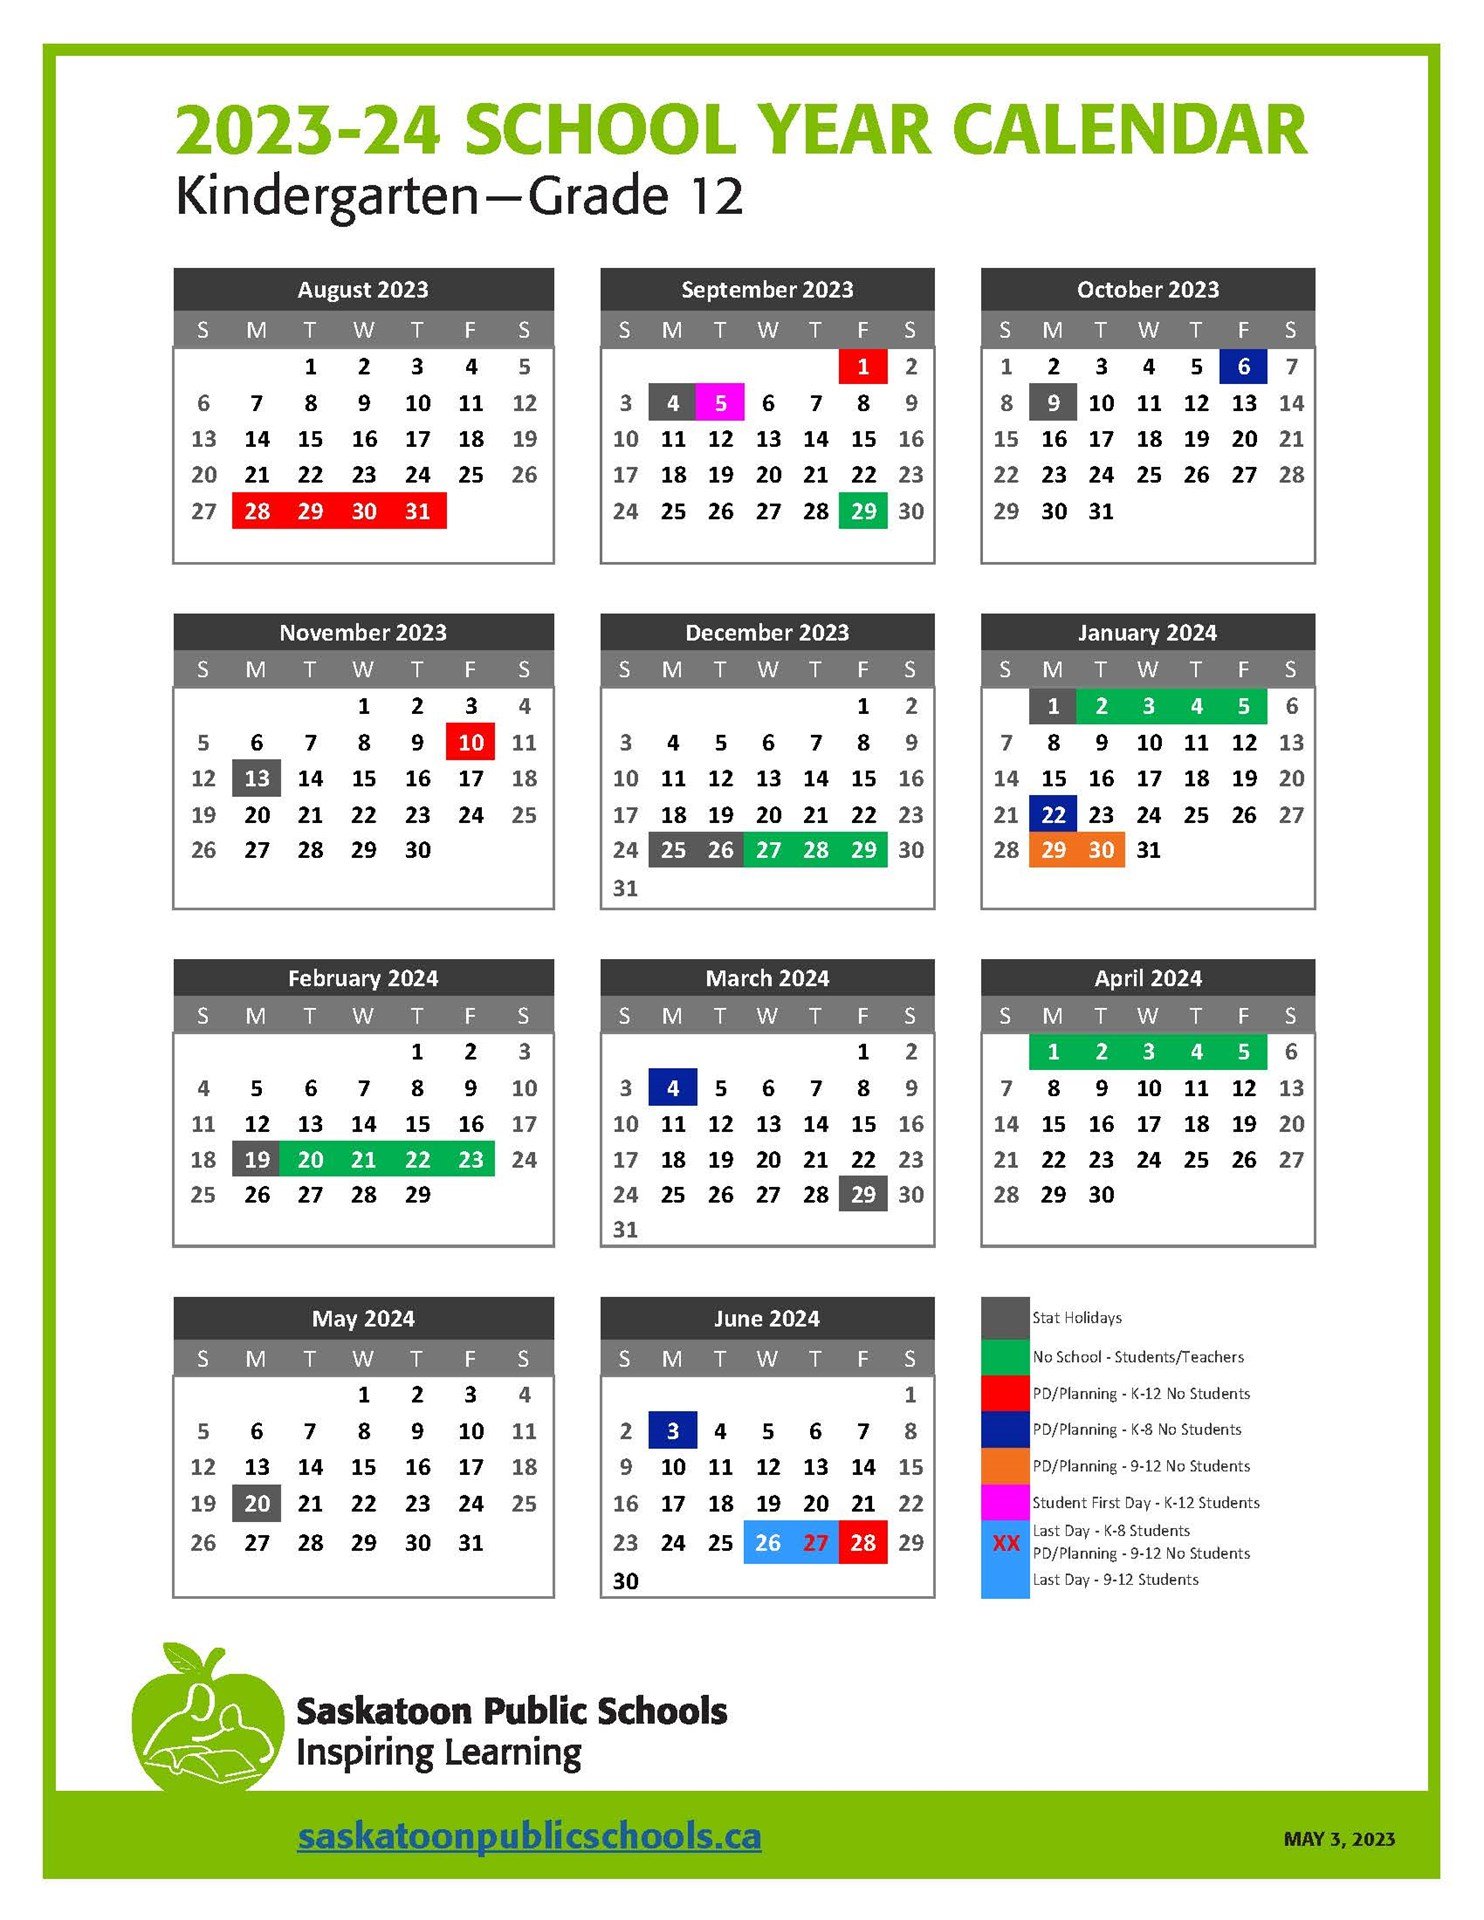 School Year Calendar Saskatoon Public Schools